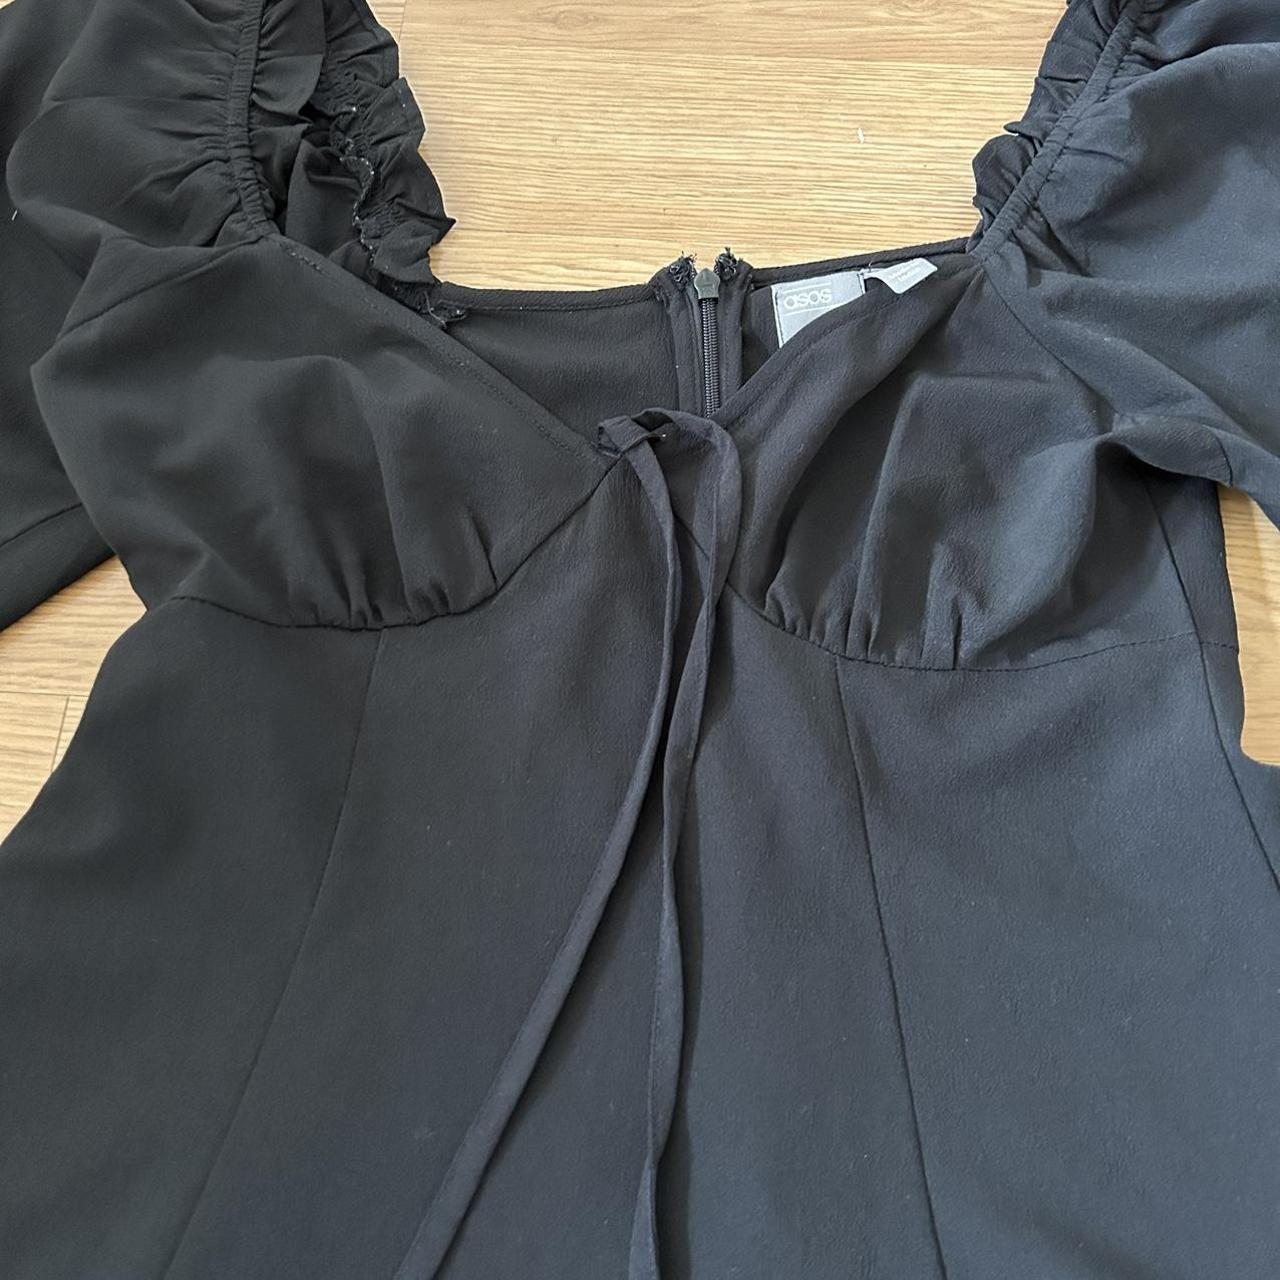 ASOS Women's Black Dress (2)